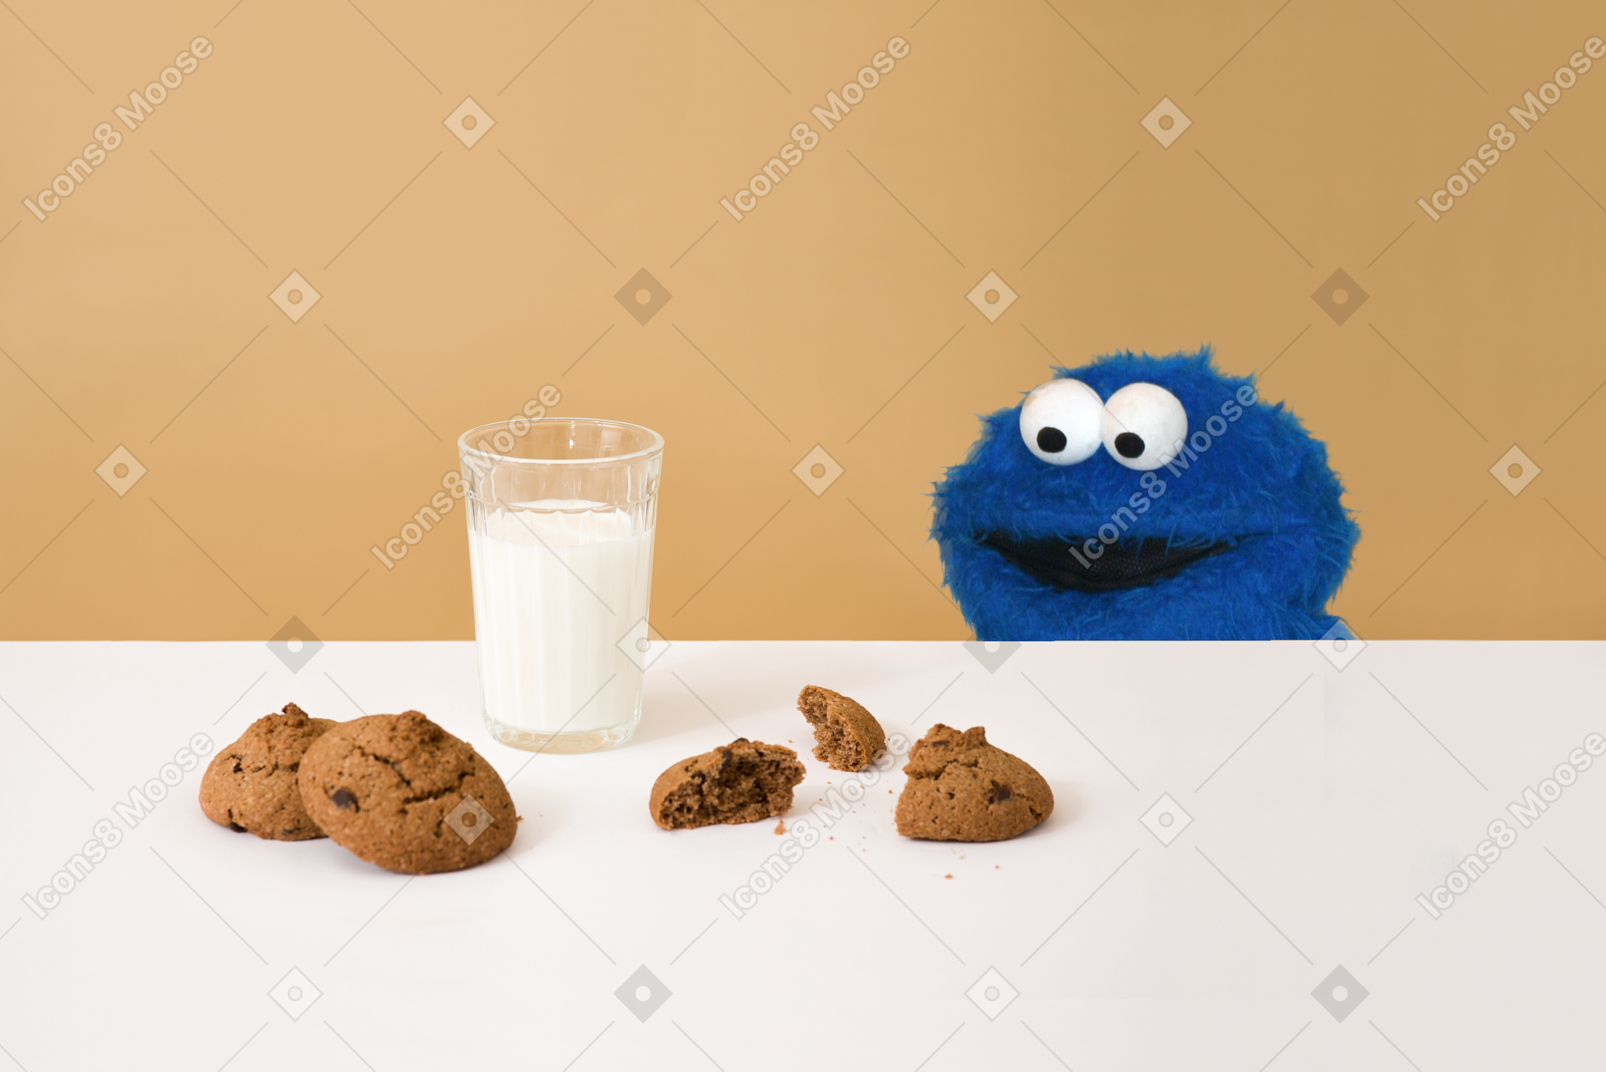 Hey, humans got milk and cookies